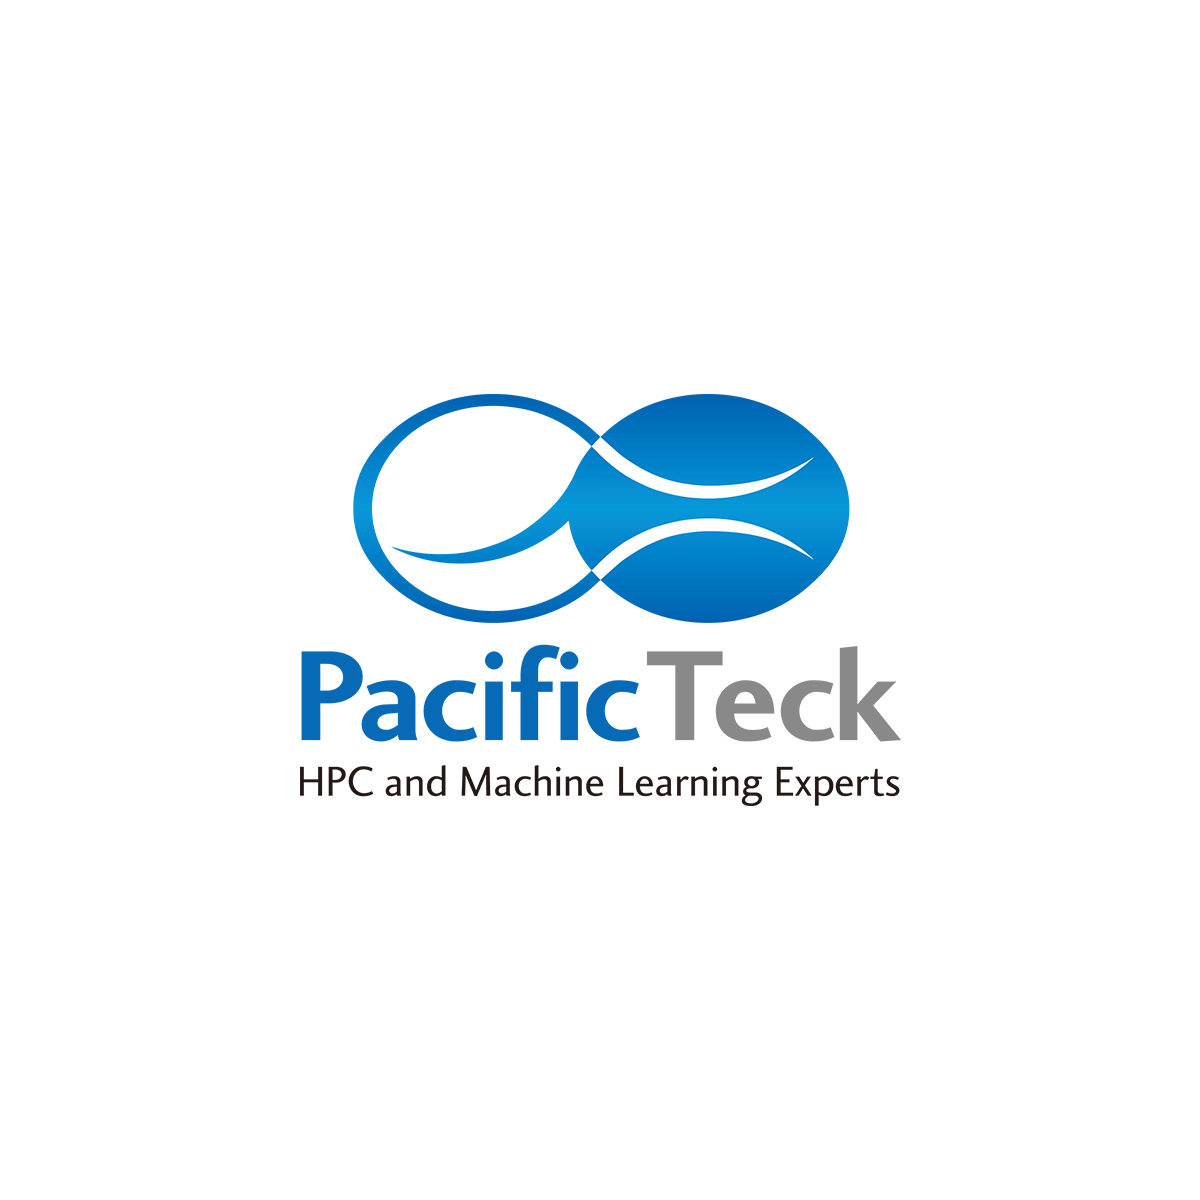 Pacific Teck